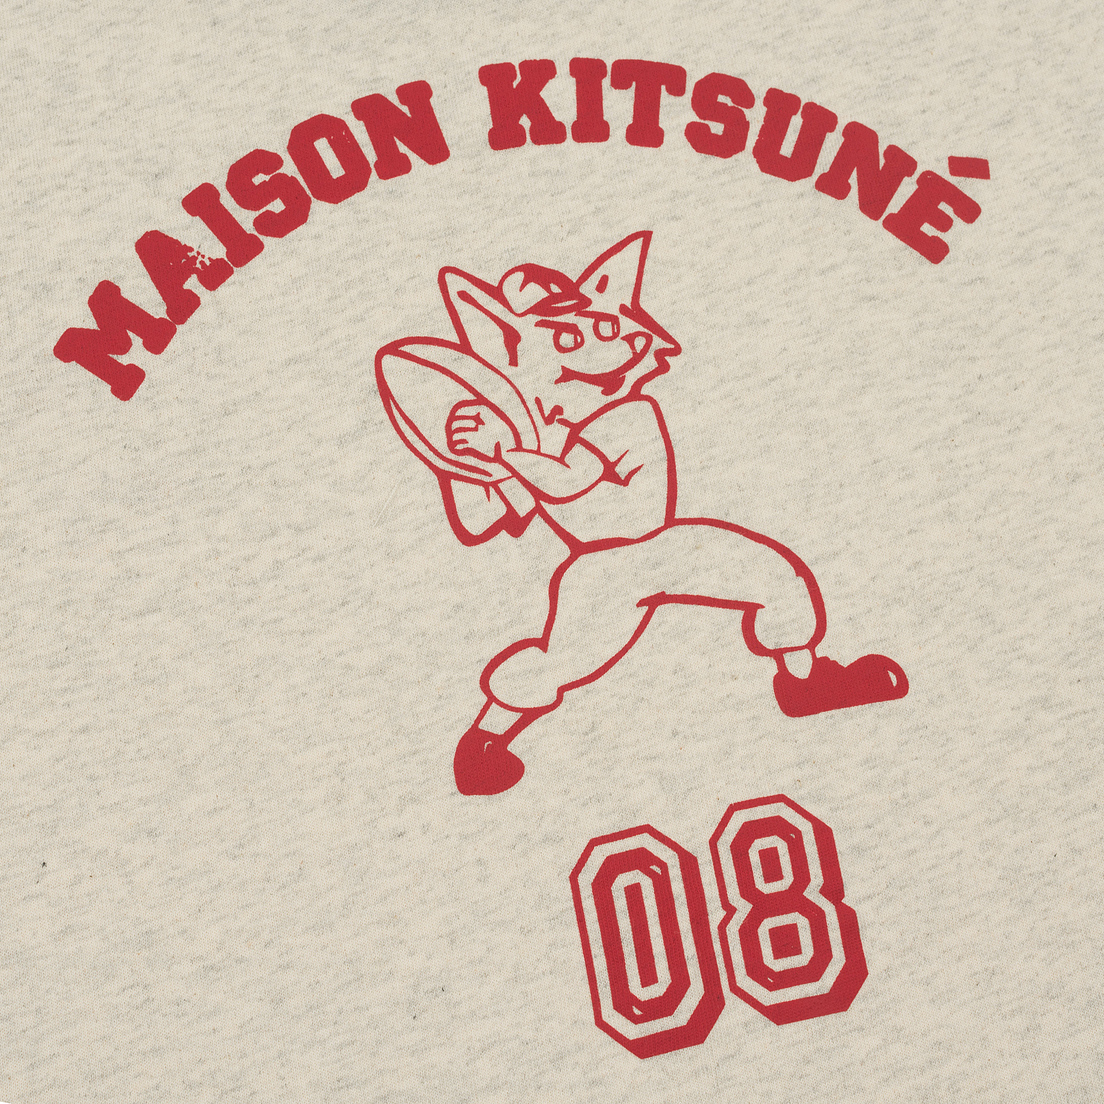 Maison Kitsune Мужская футболка MK 08